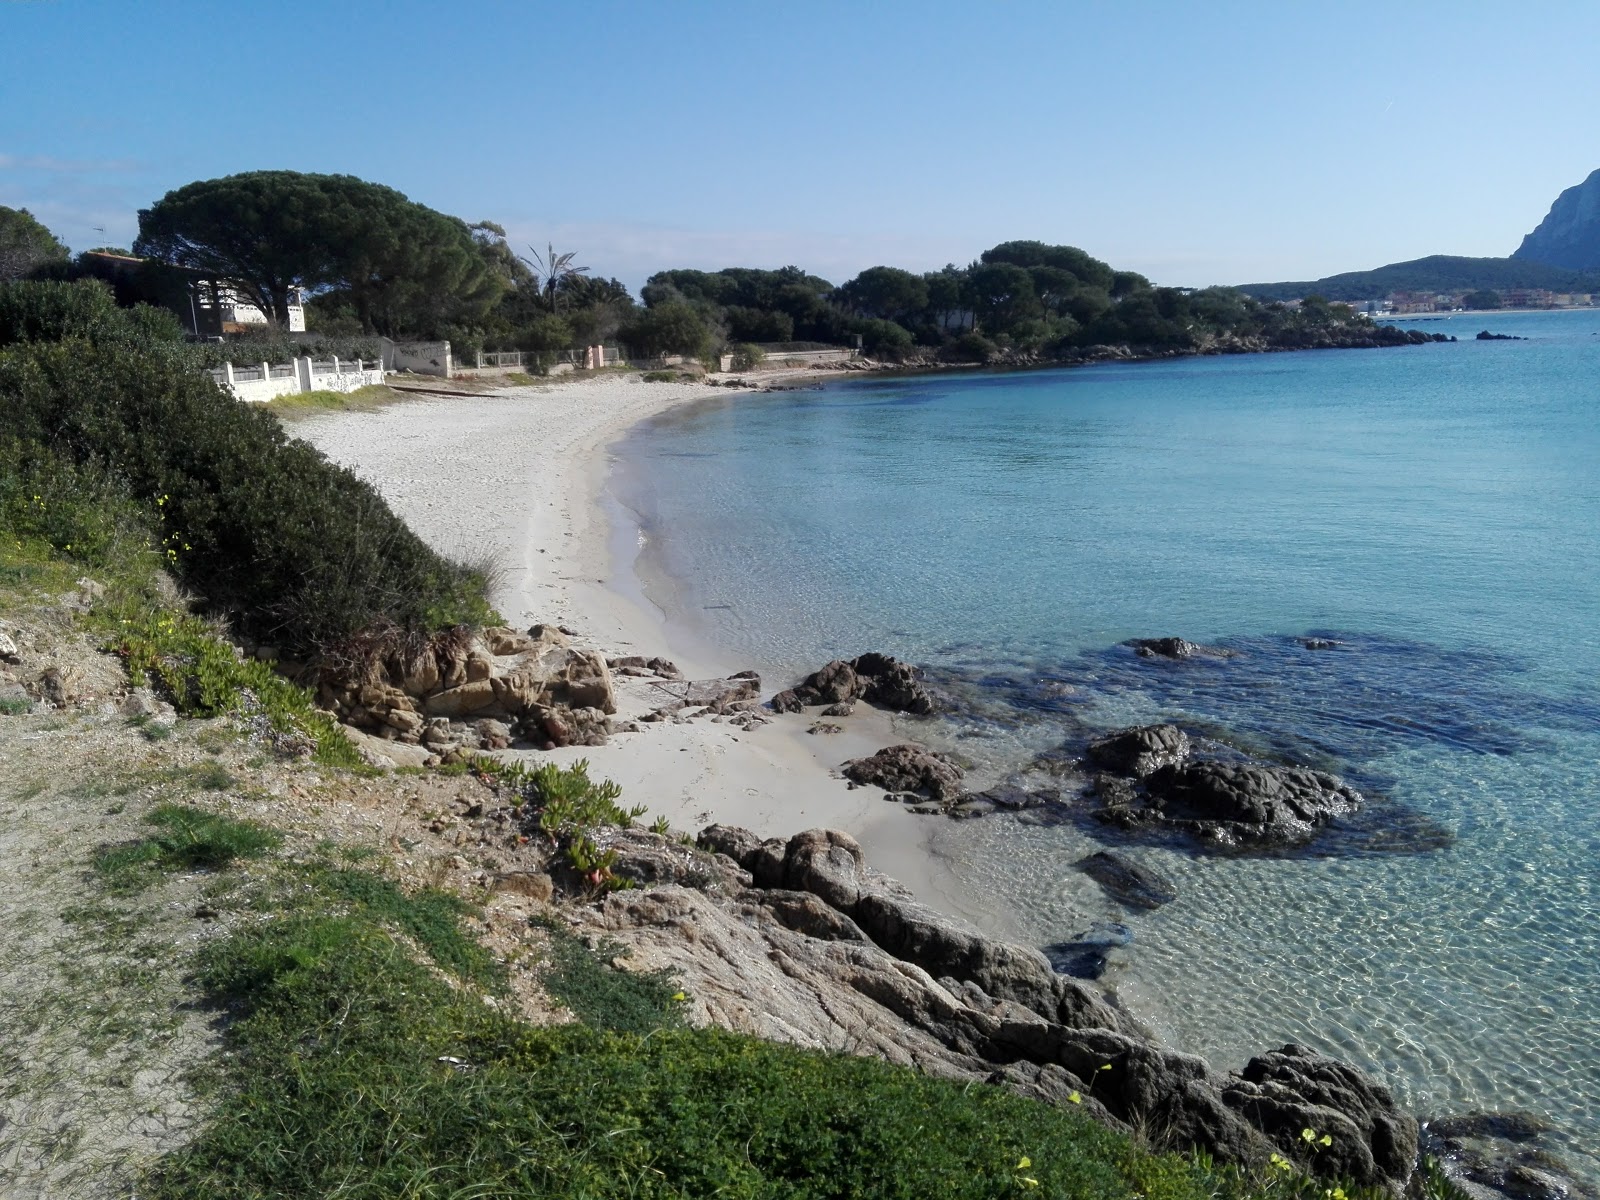 Fotografie cu Quinta Spiaggia - locul popular printre cunoscătorii de relaxare